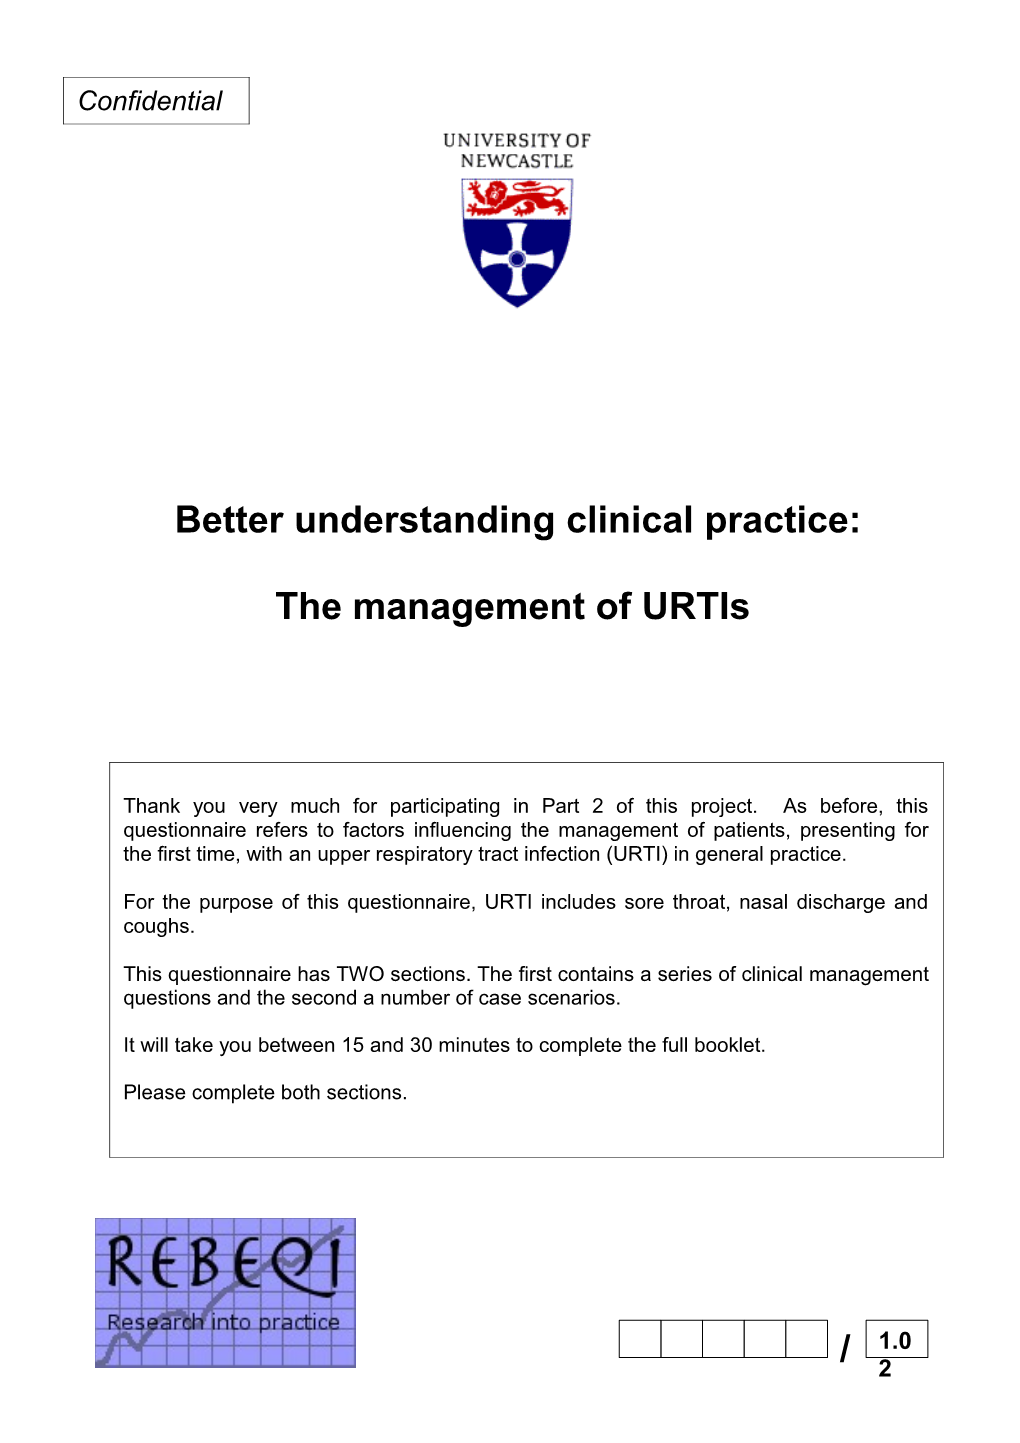 Better Understanding Clinical Practice